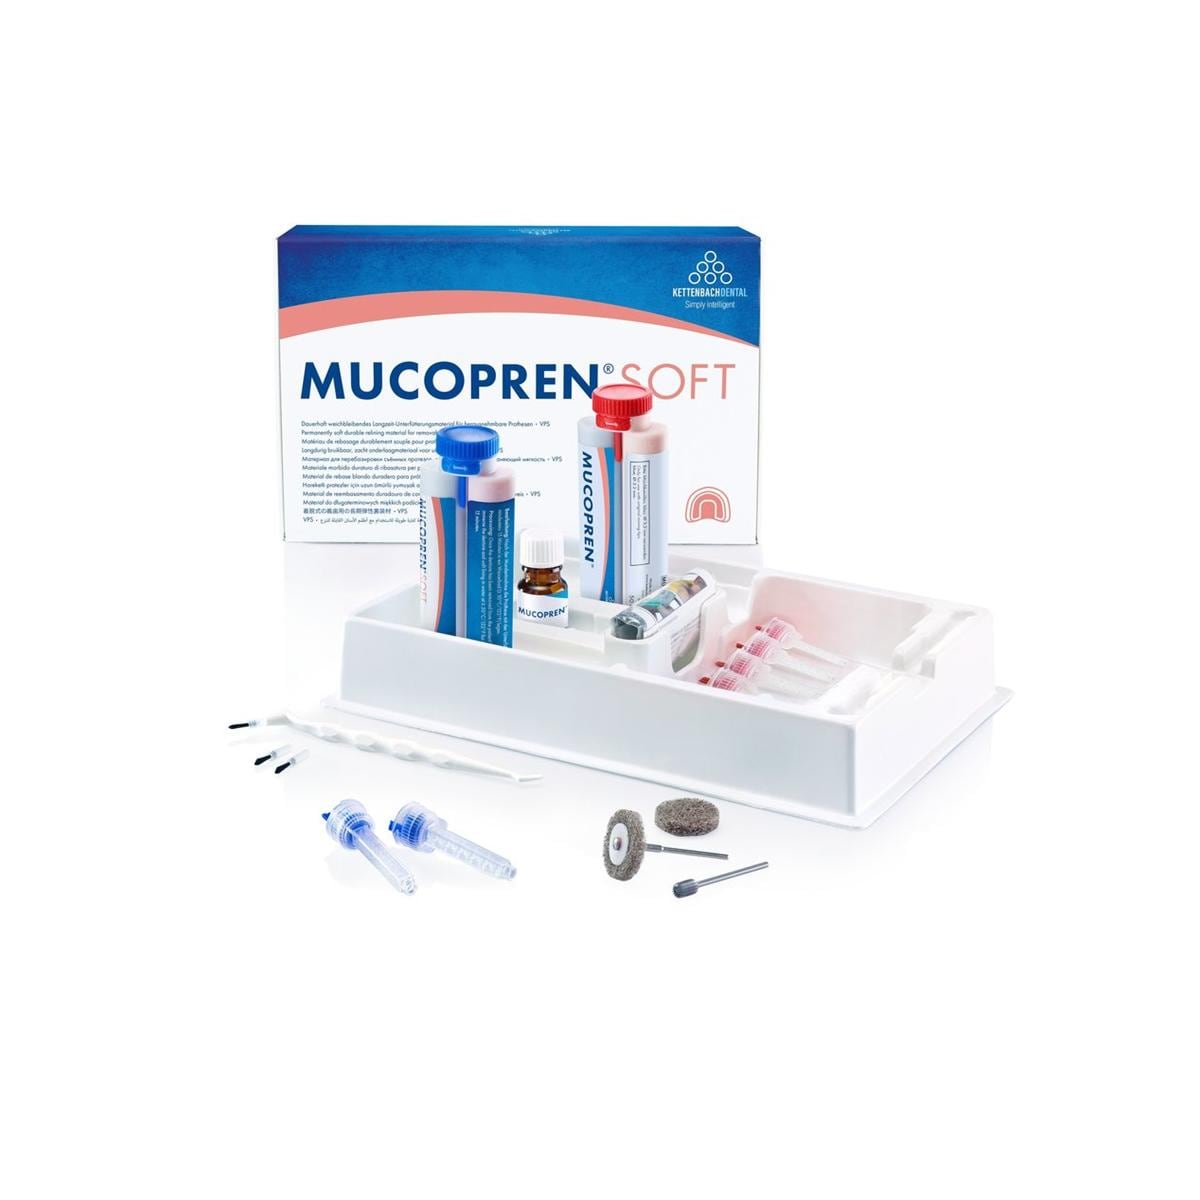 Mucopren Soft Basic Set - REF. 28105